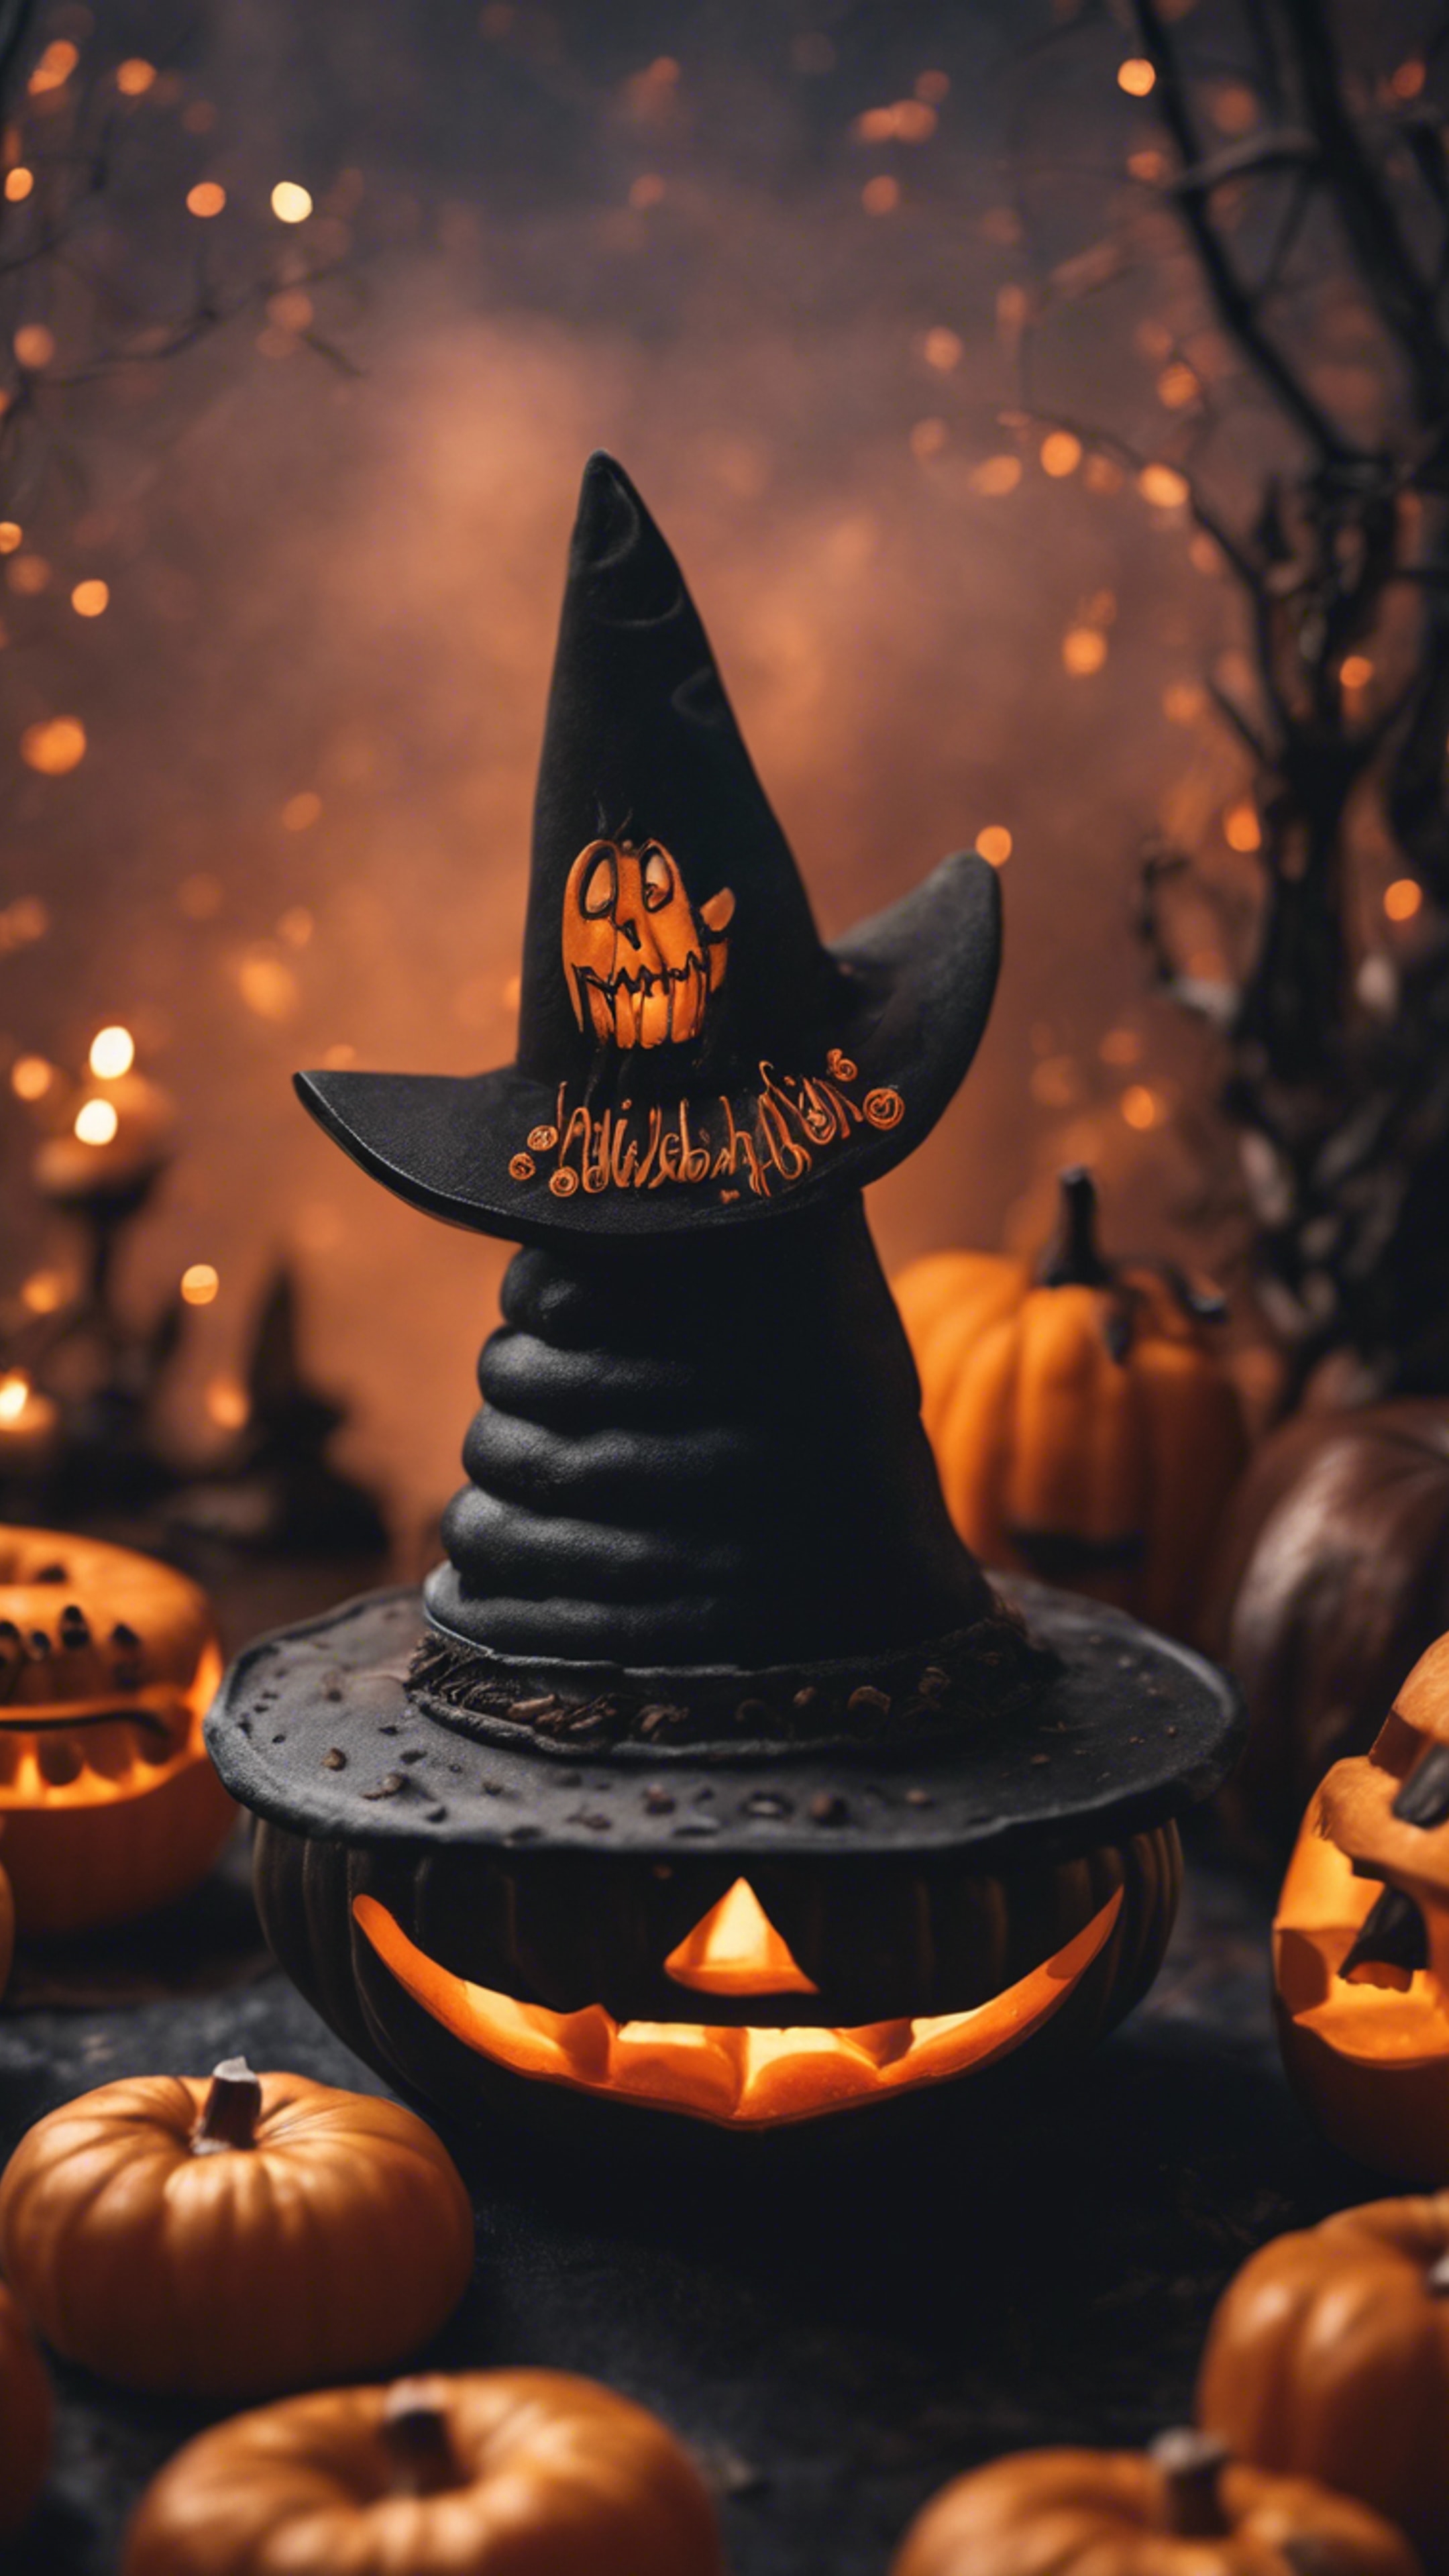 A spooky scene with jack-o-lanterns and a black witch's hat on a pumpkin-spiced donut. Divar kağızı[393956df6a264774b0c0]